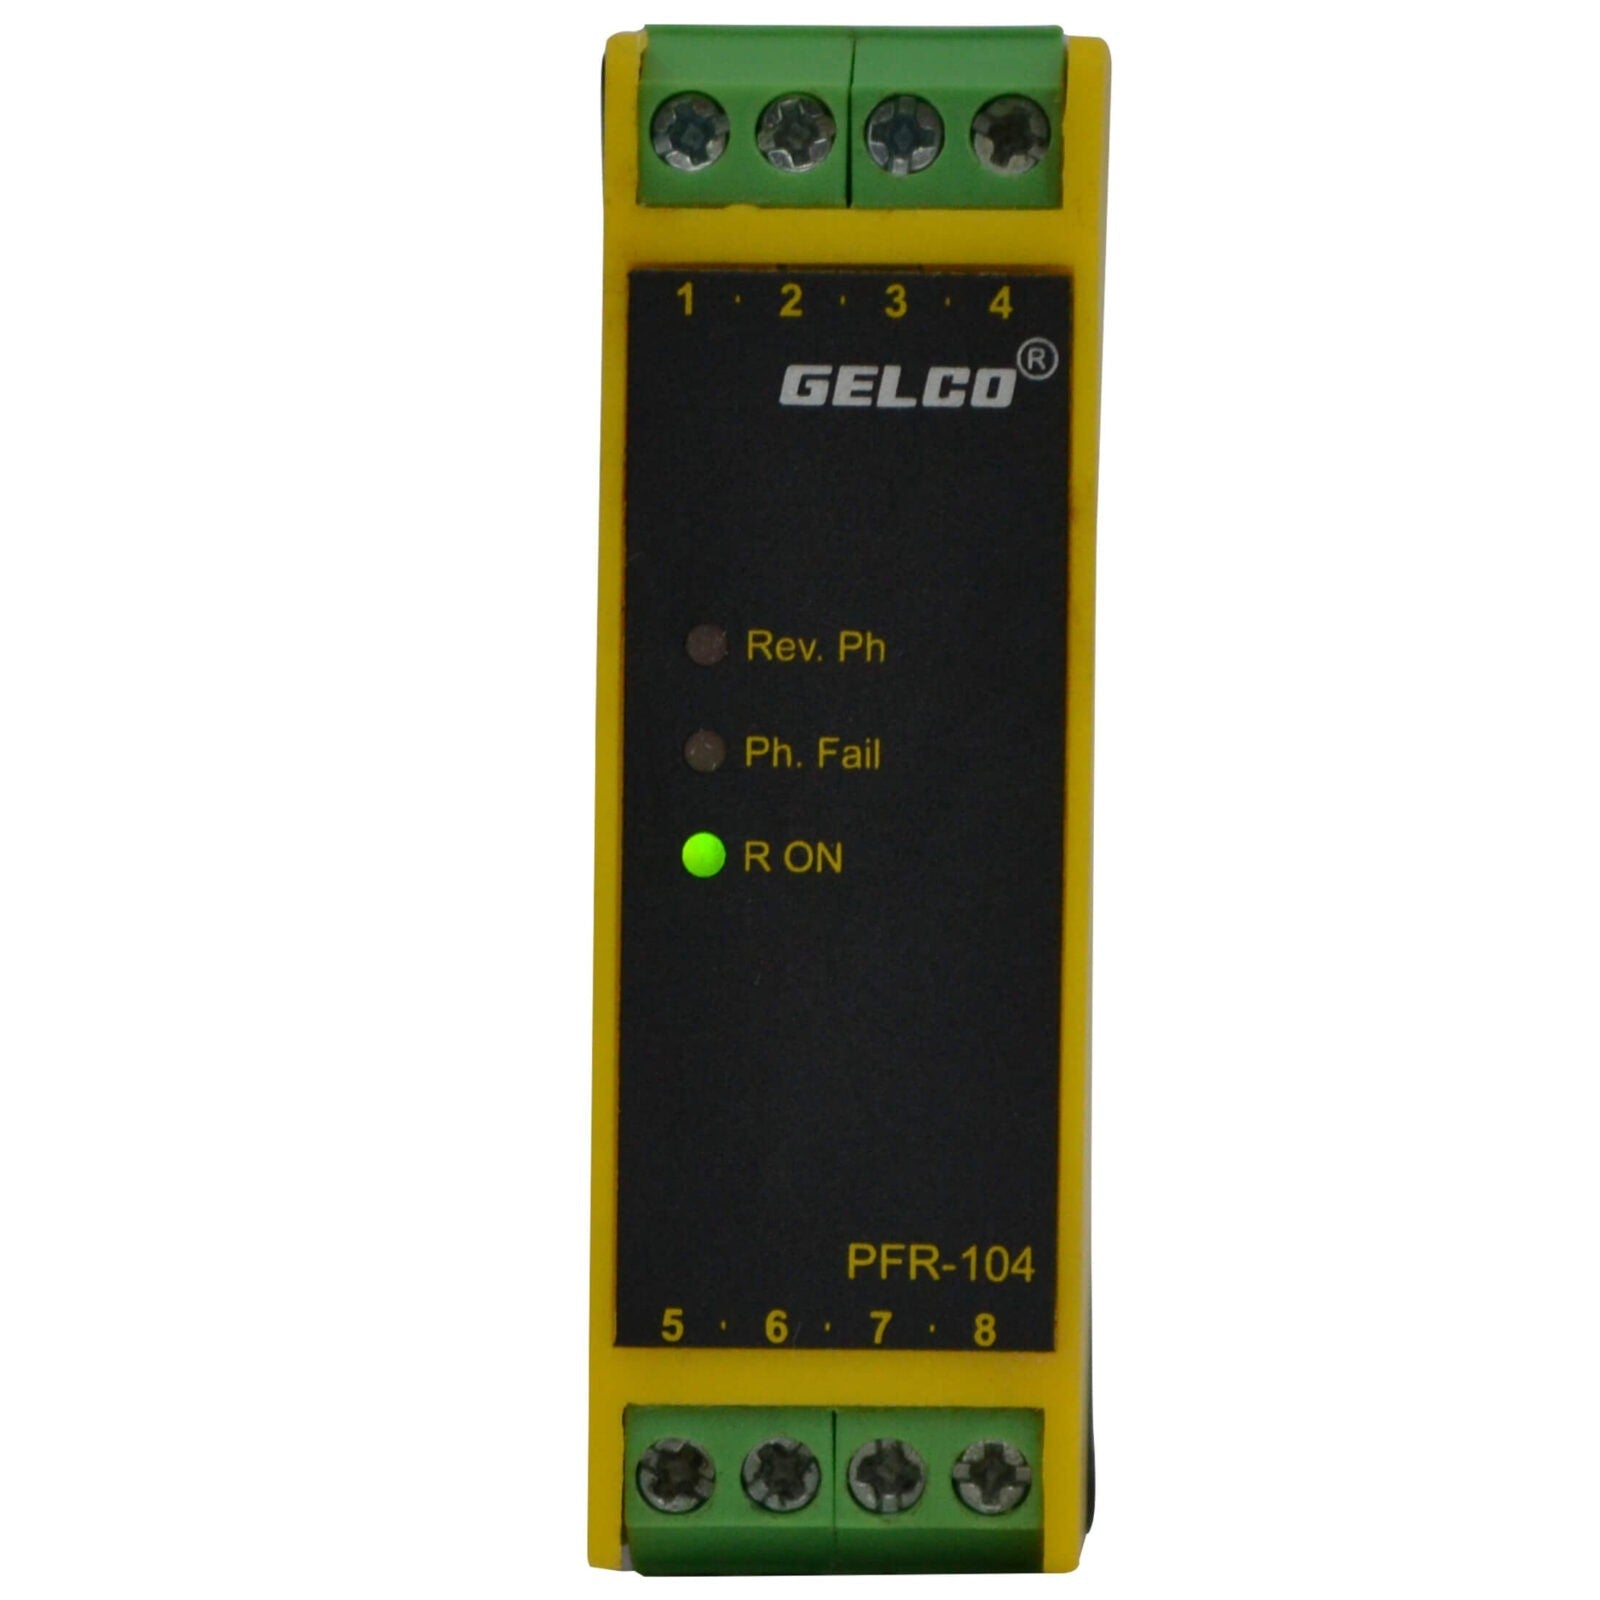 PFR-104 - Gelco Electronics Pvt. Ltd.